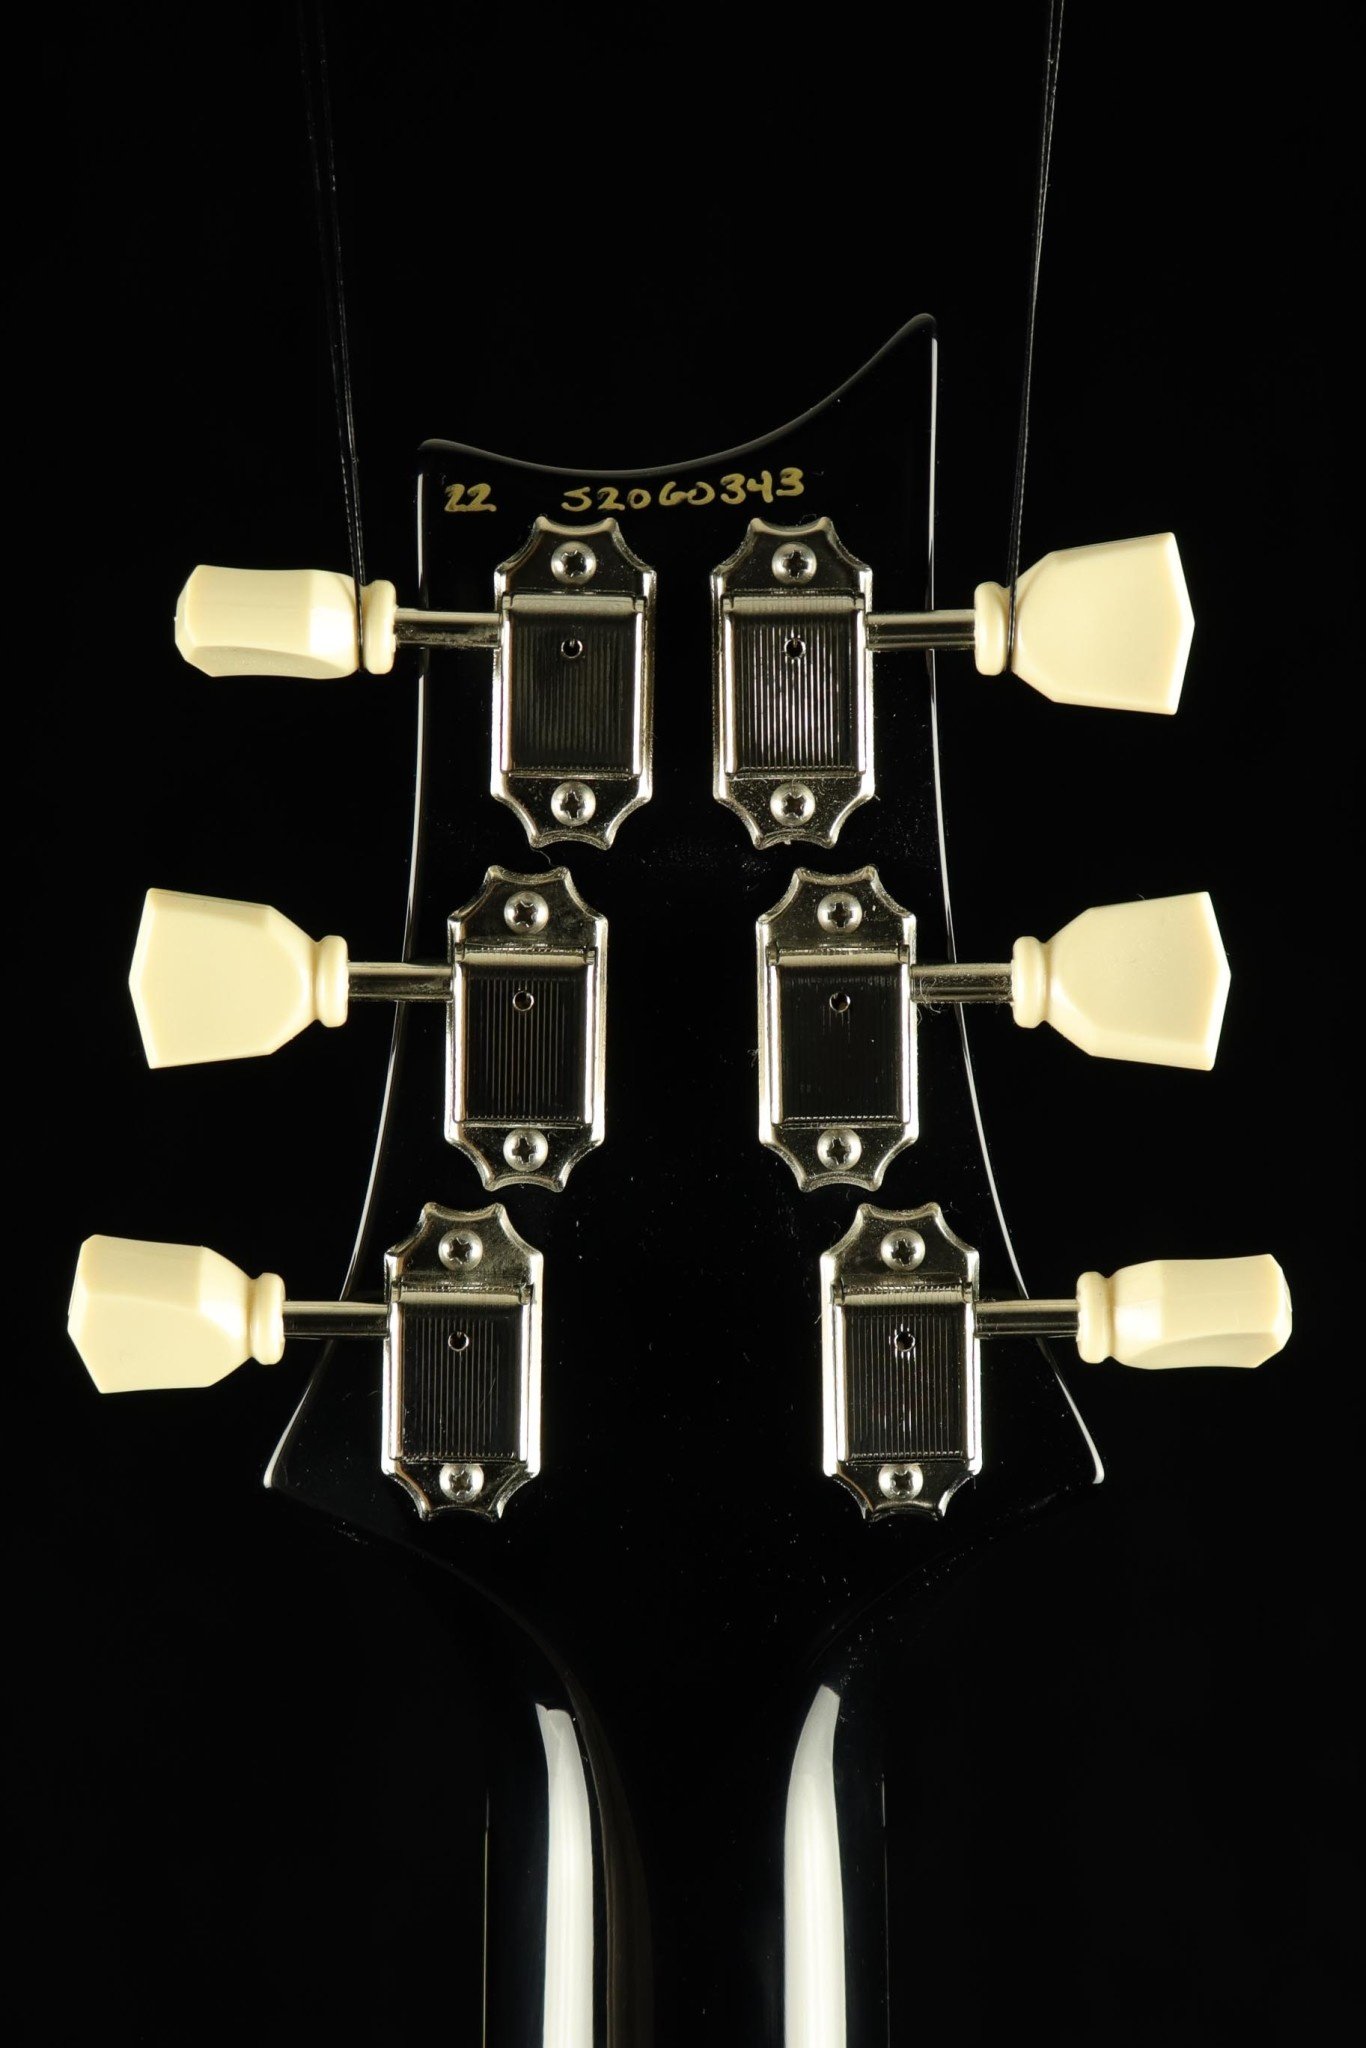 PRS Guitars PRS S2 McCarty 594 Singlecut Electric Guitar - Black